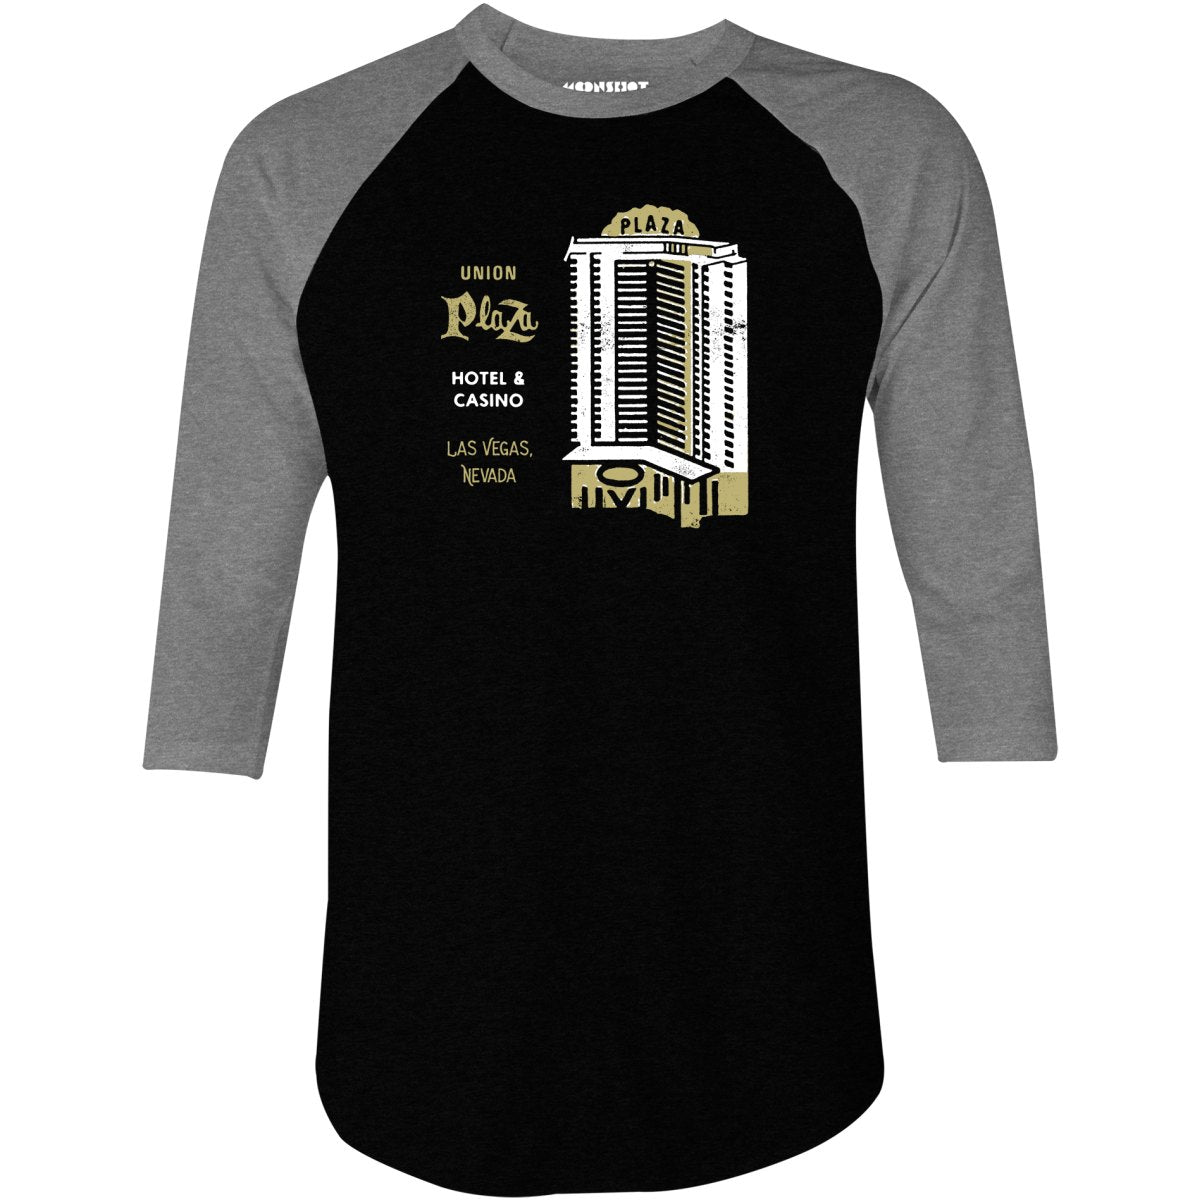 Union Plaza Hotel & Casino v2 - Vintage Las Vegas - 3/4 Sleeve Raglan T-Shirt